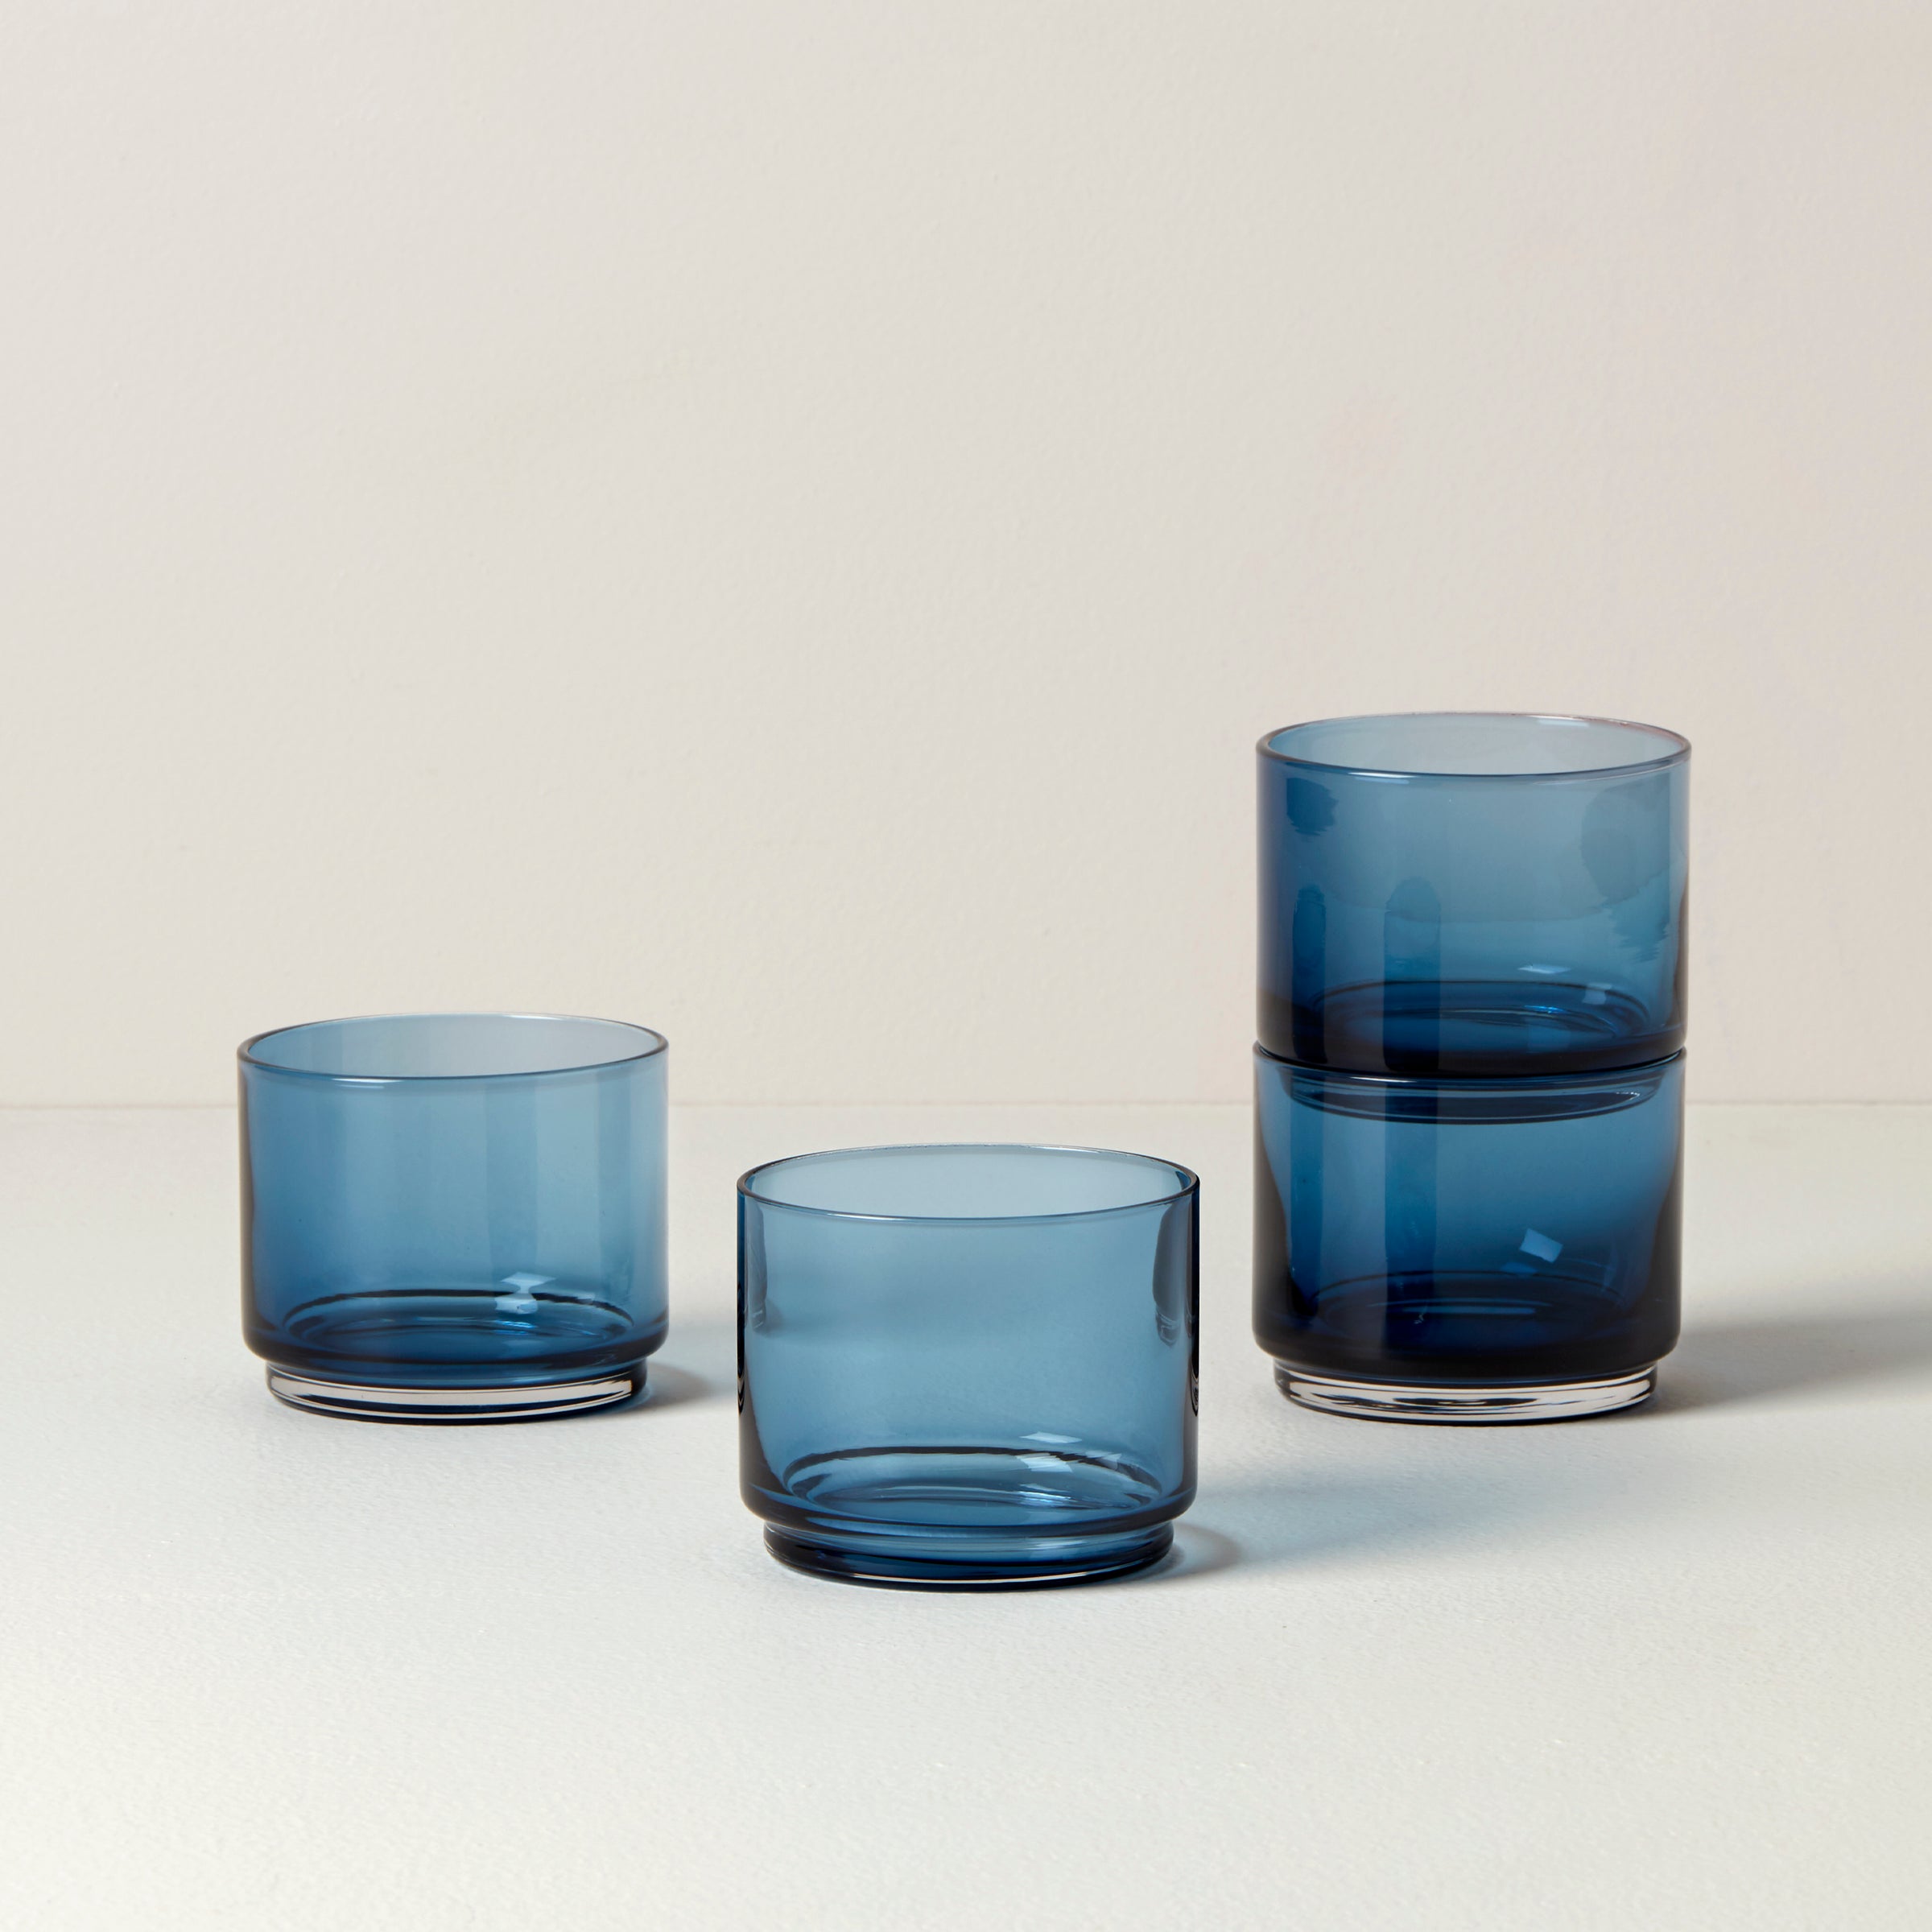 Tuscany Classics Stackable 4-Piece Wine Glass Set – Lenox Corporation